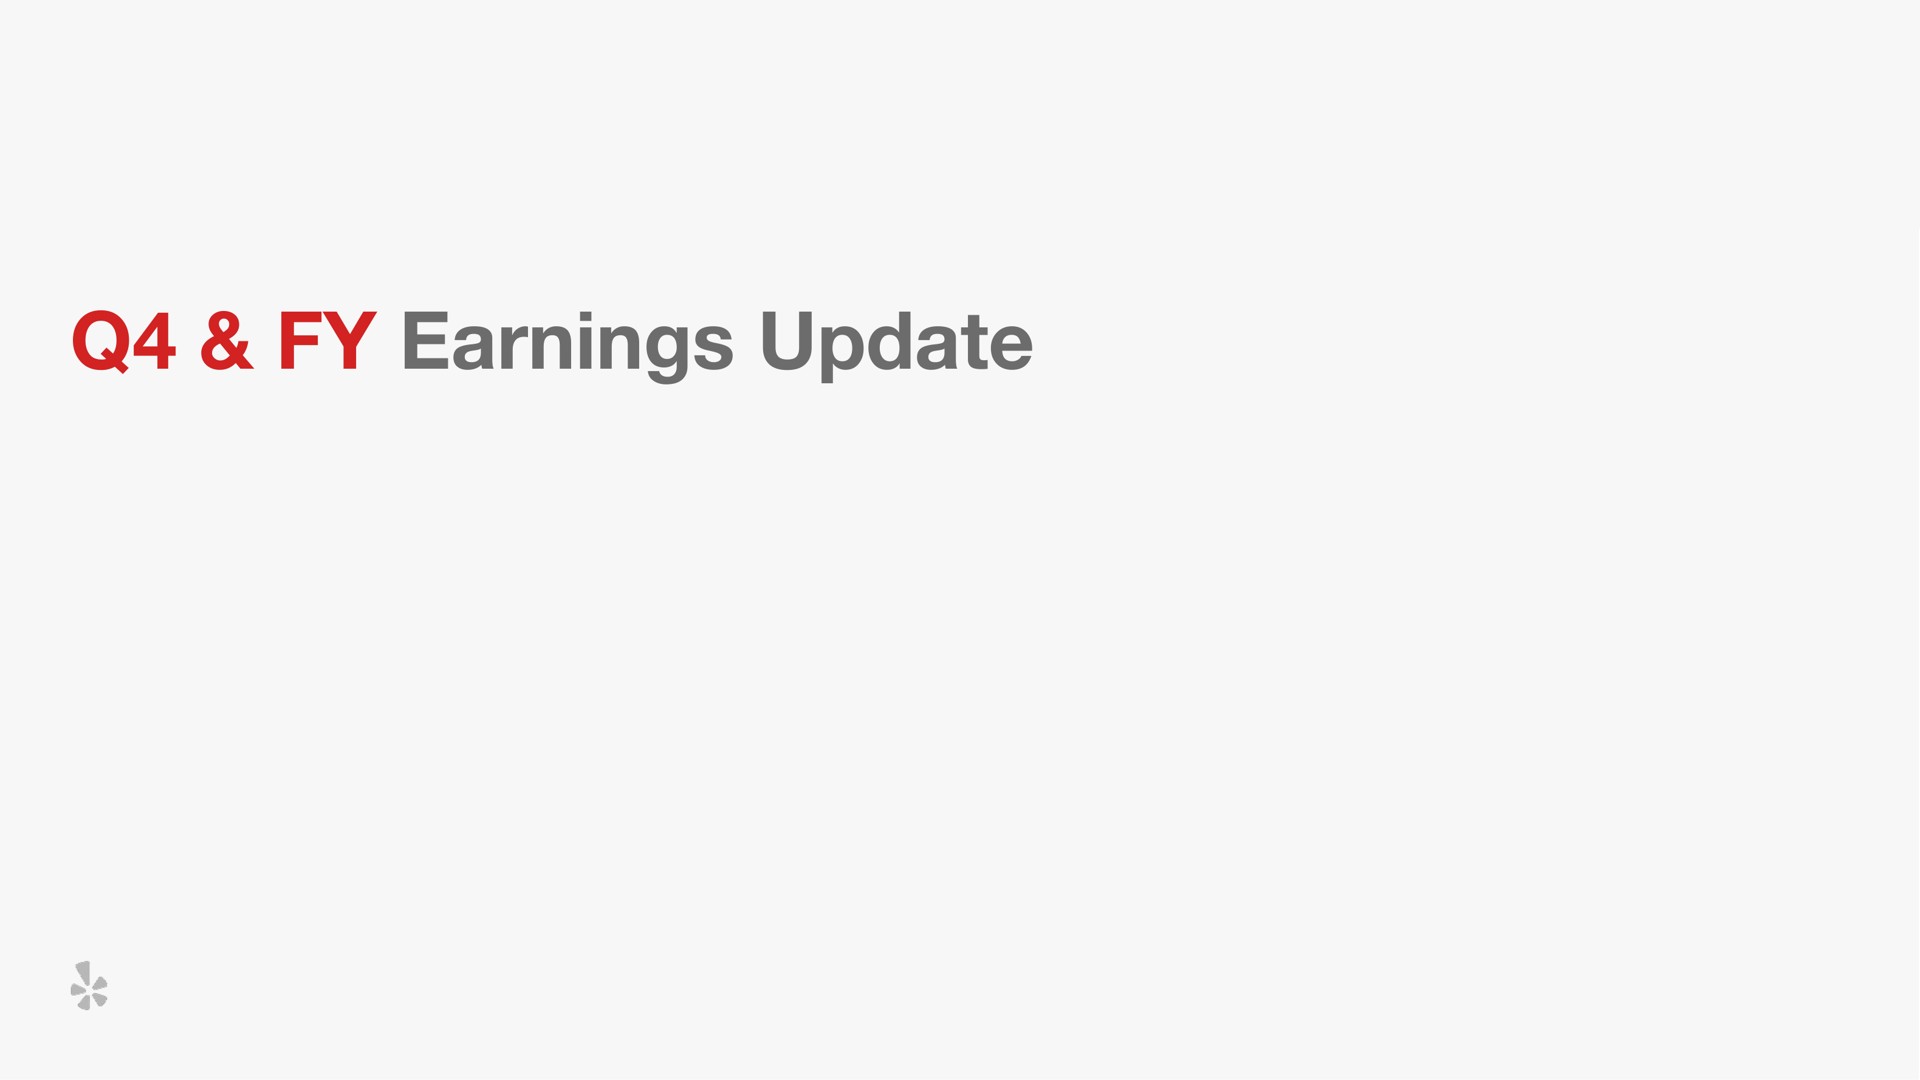 earnings update | Yelp